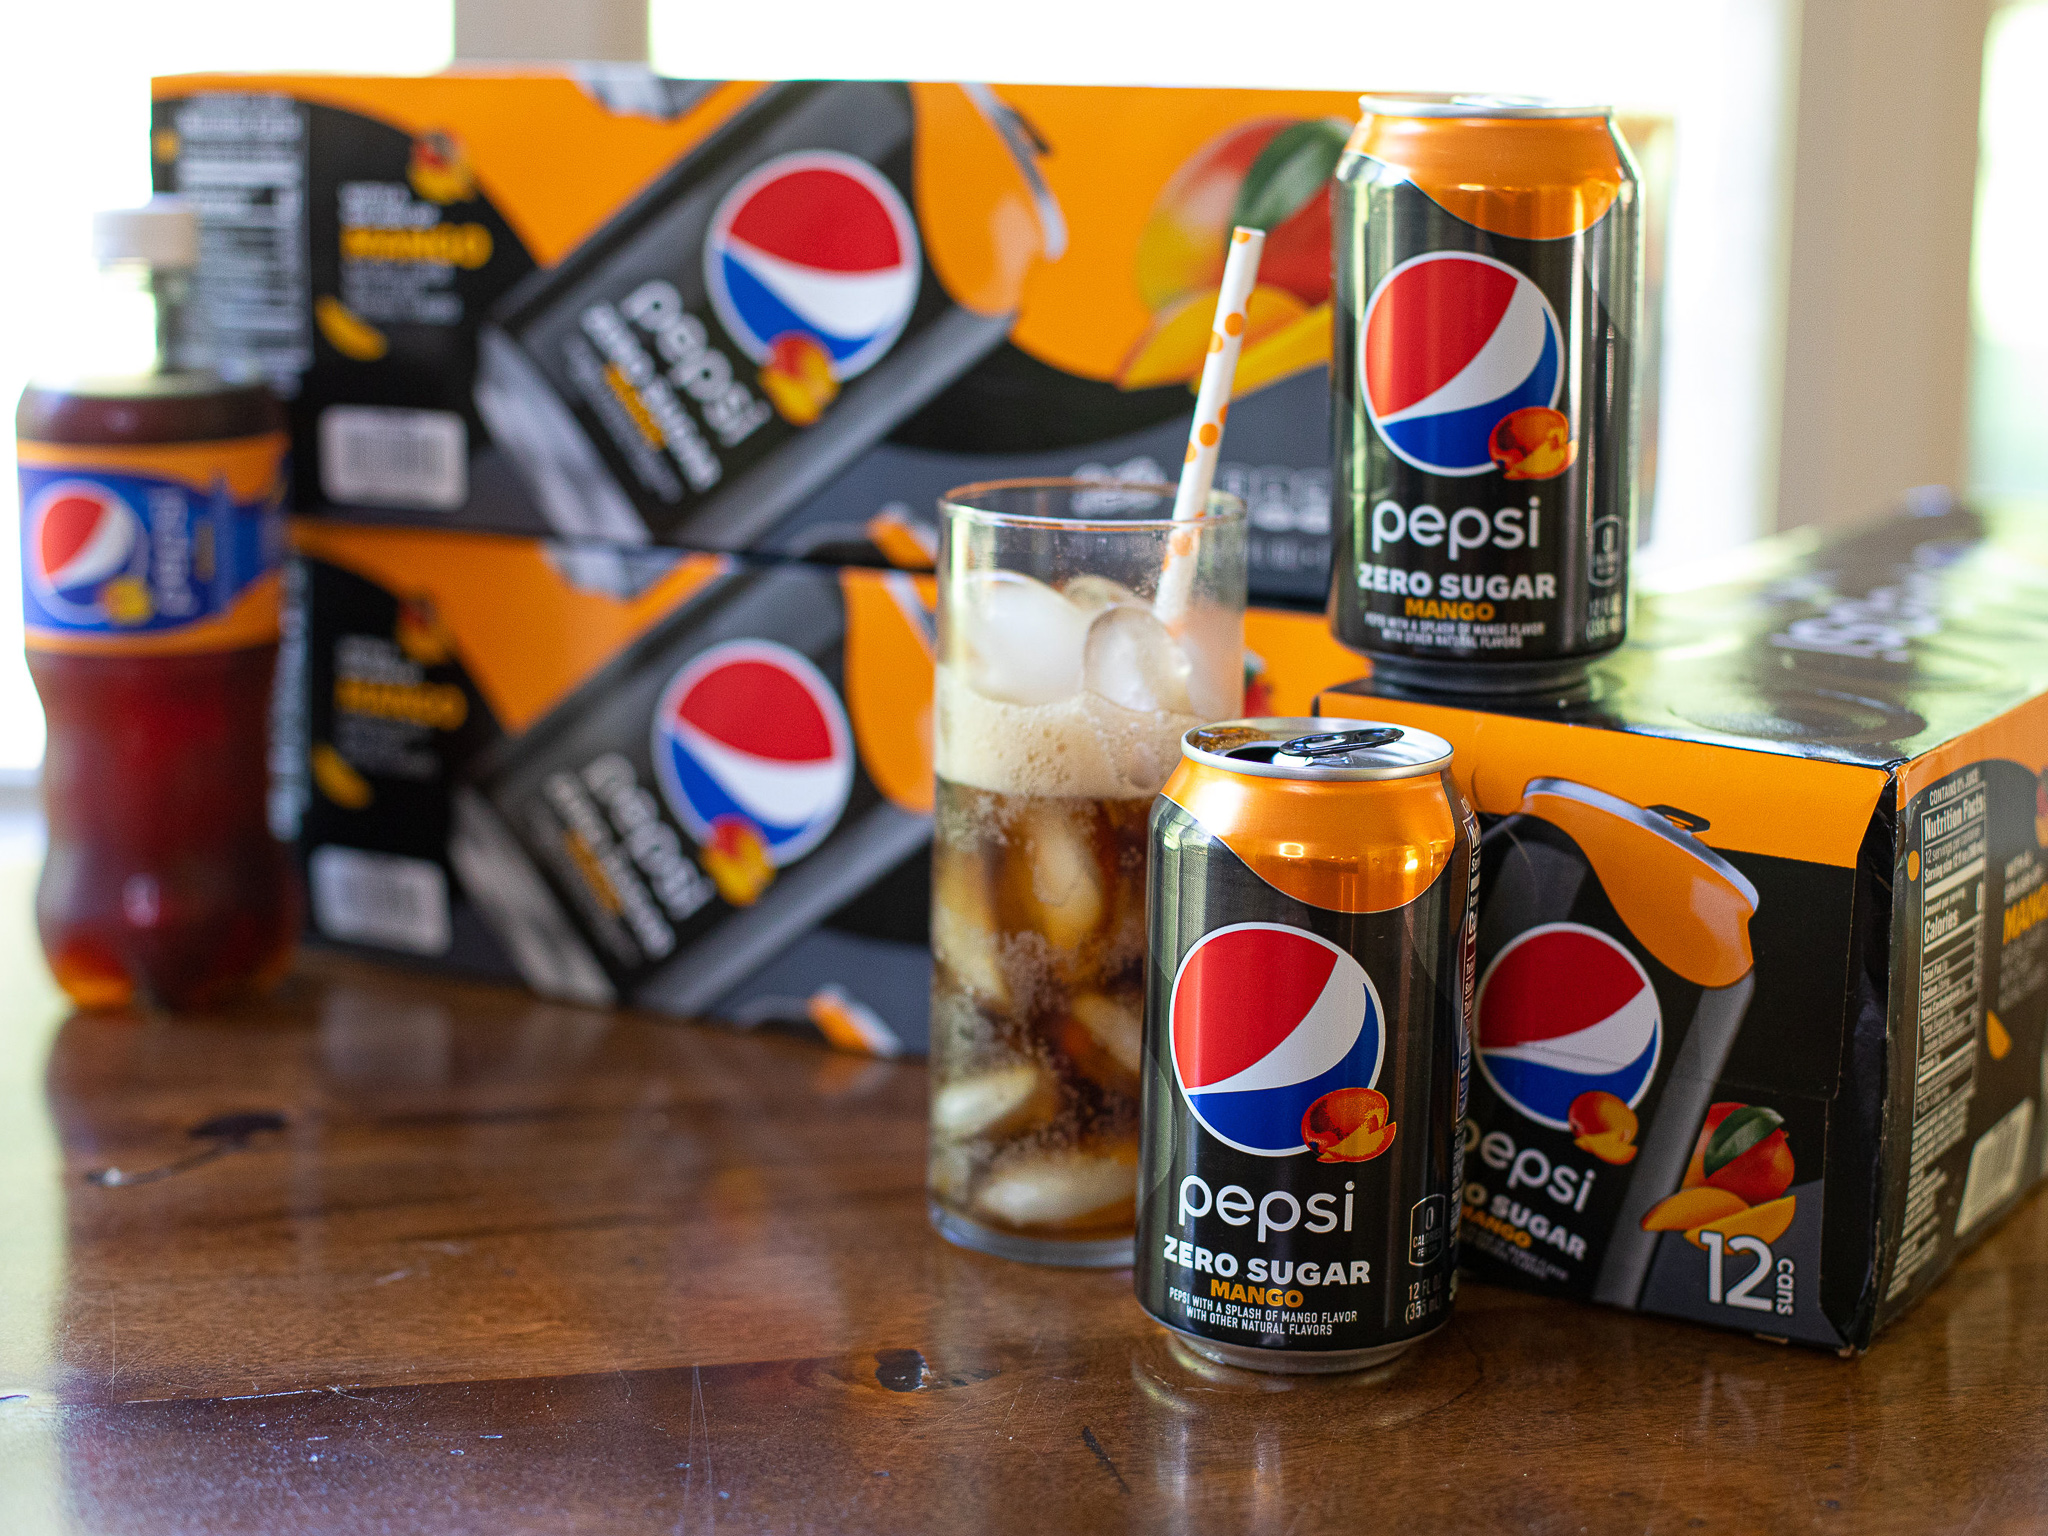 Pepsi Zero Sugar 12-Packs As Low As $5.53 At Publix (Regular Price $8.79)